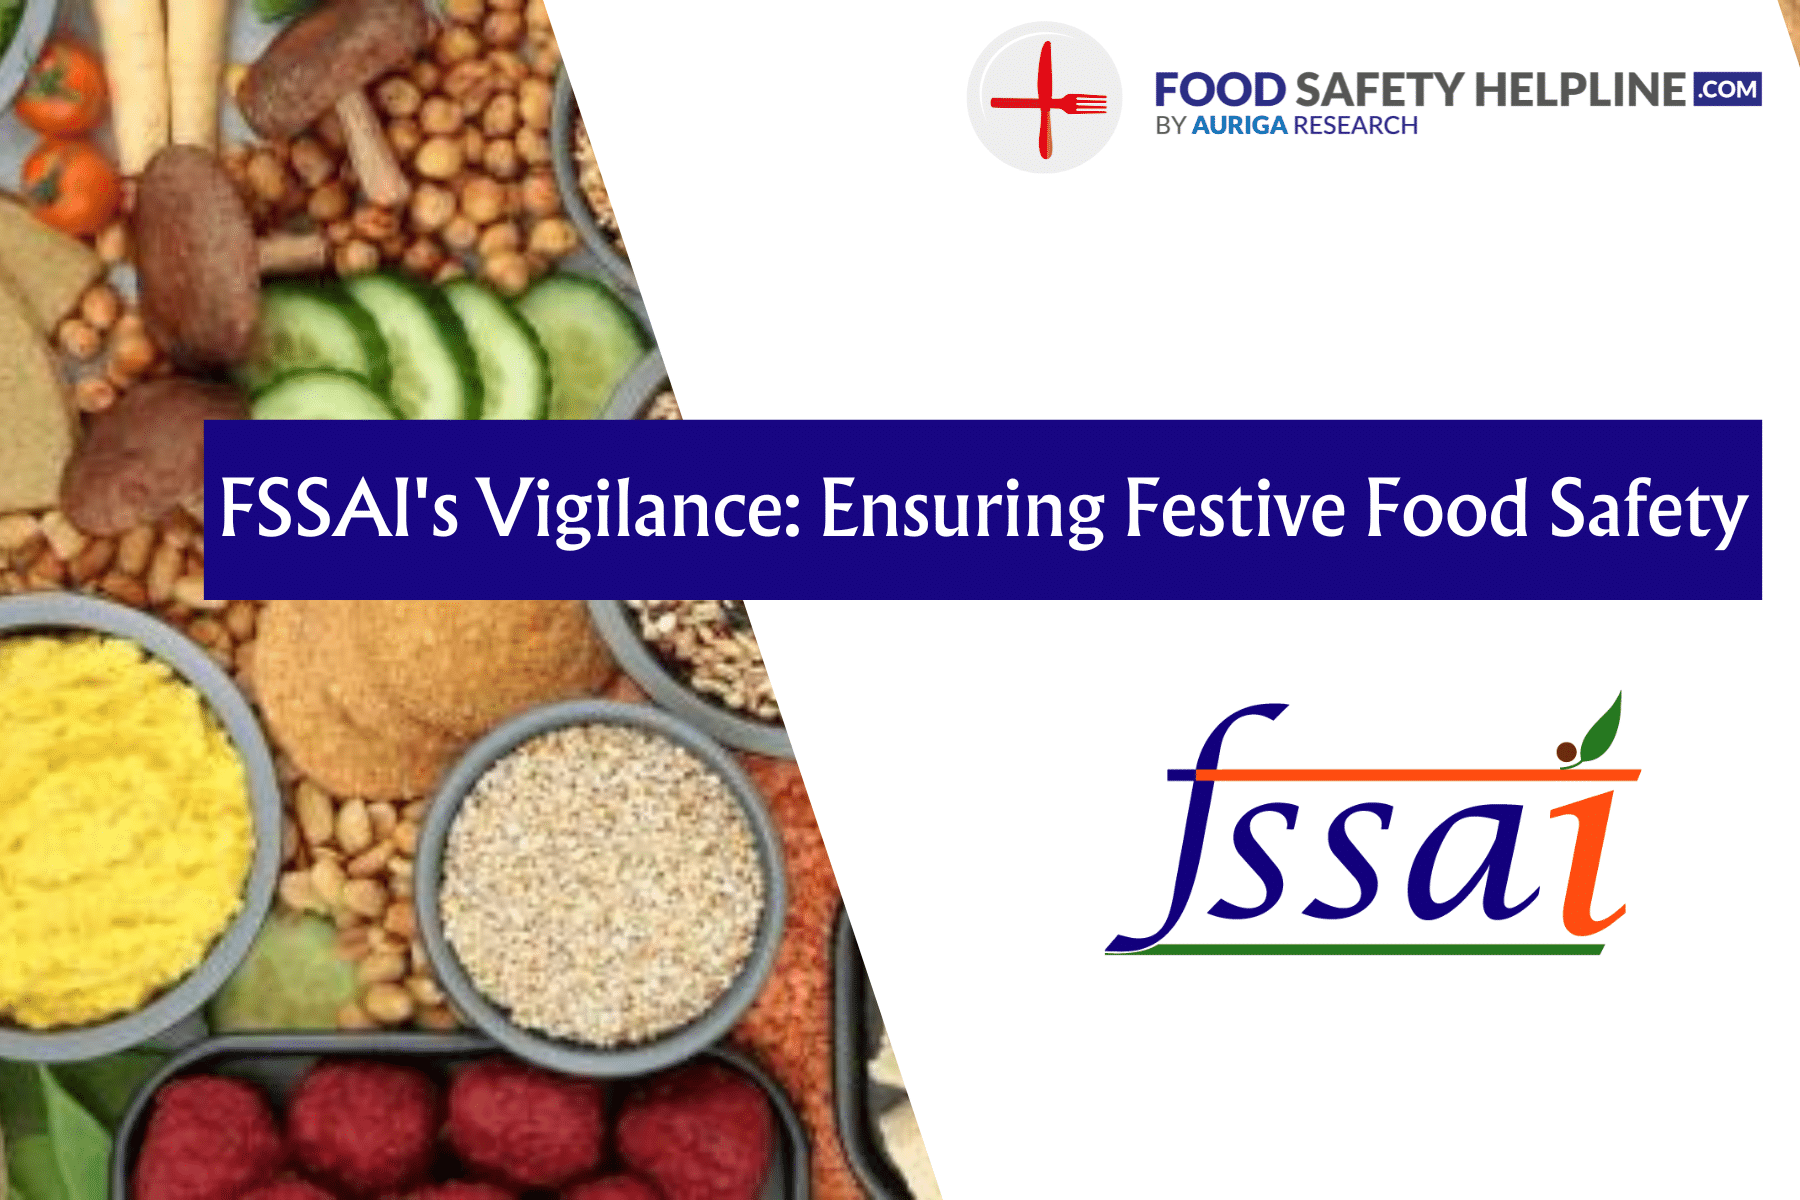 FSSAI’s Vigilance: Ensuring Festive Food Safety